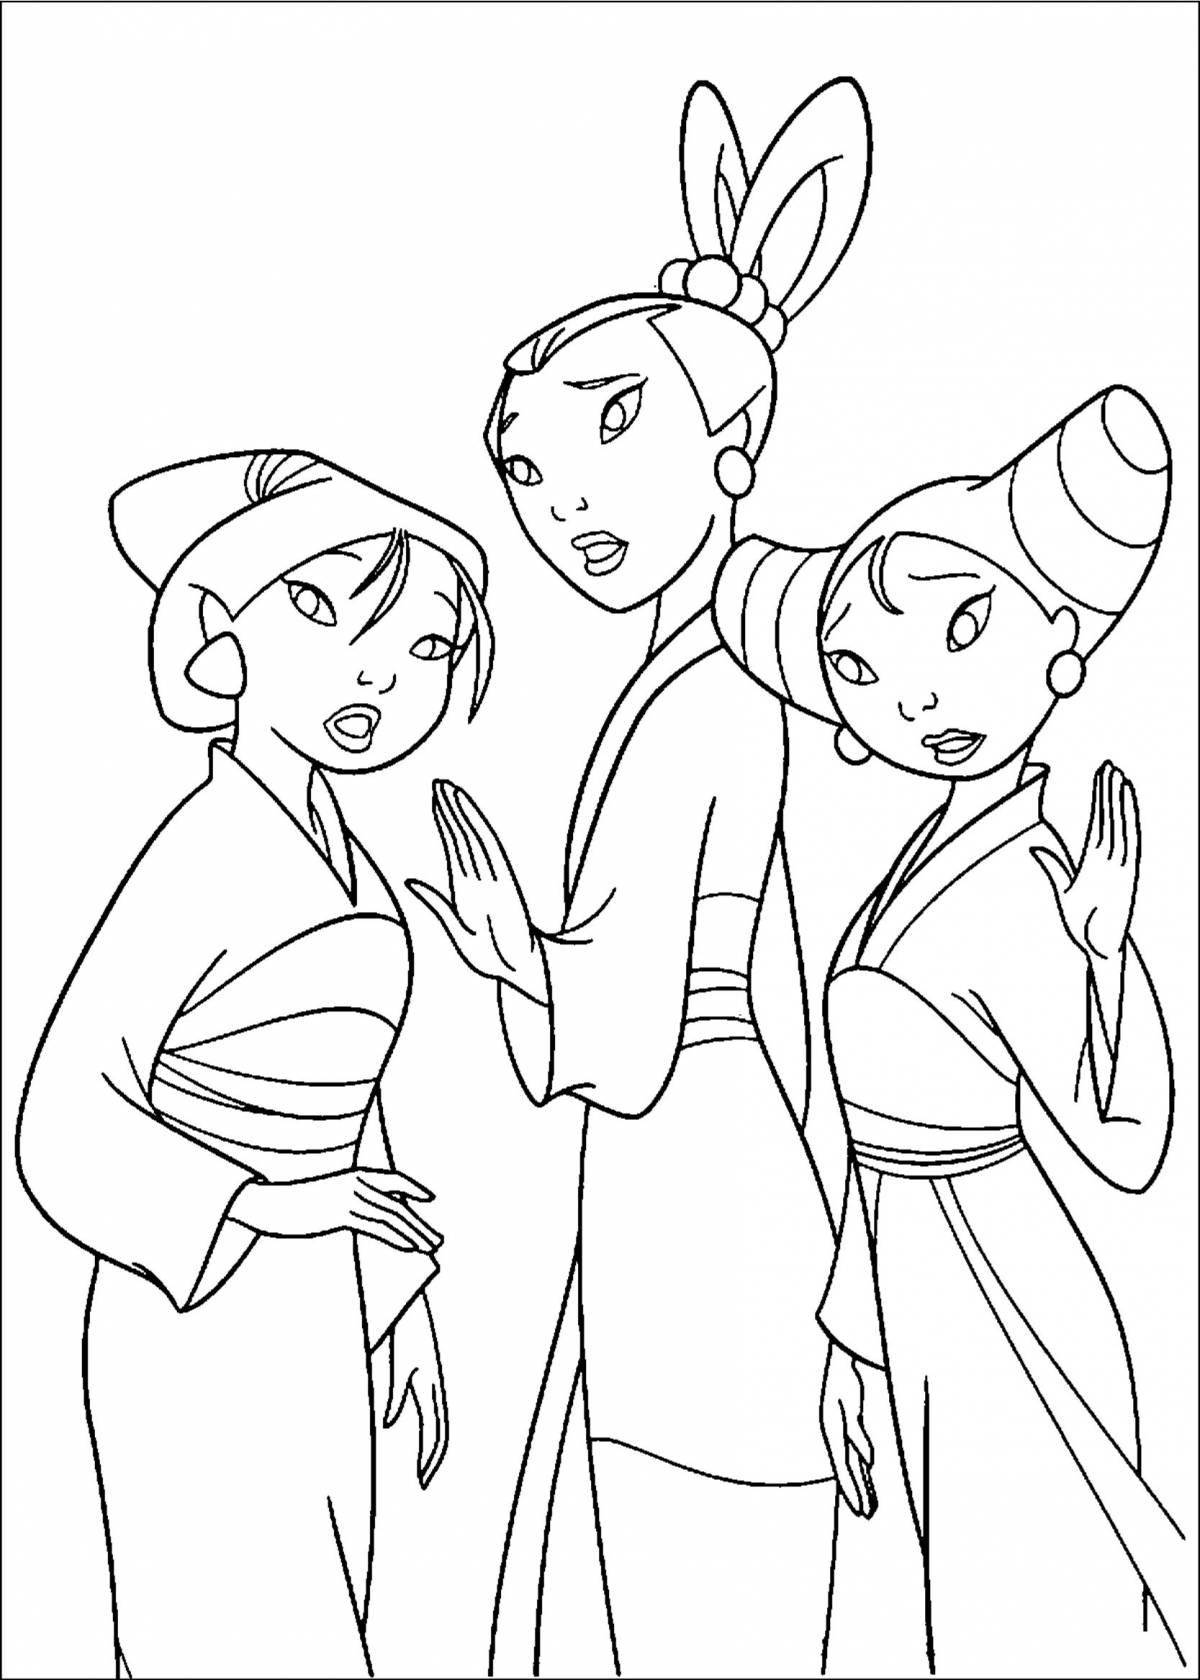 Fun coloring of Princess Mulan